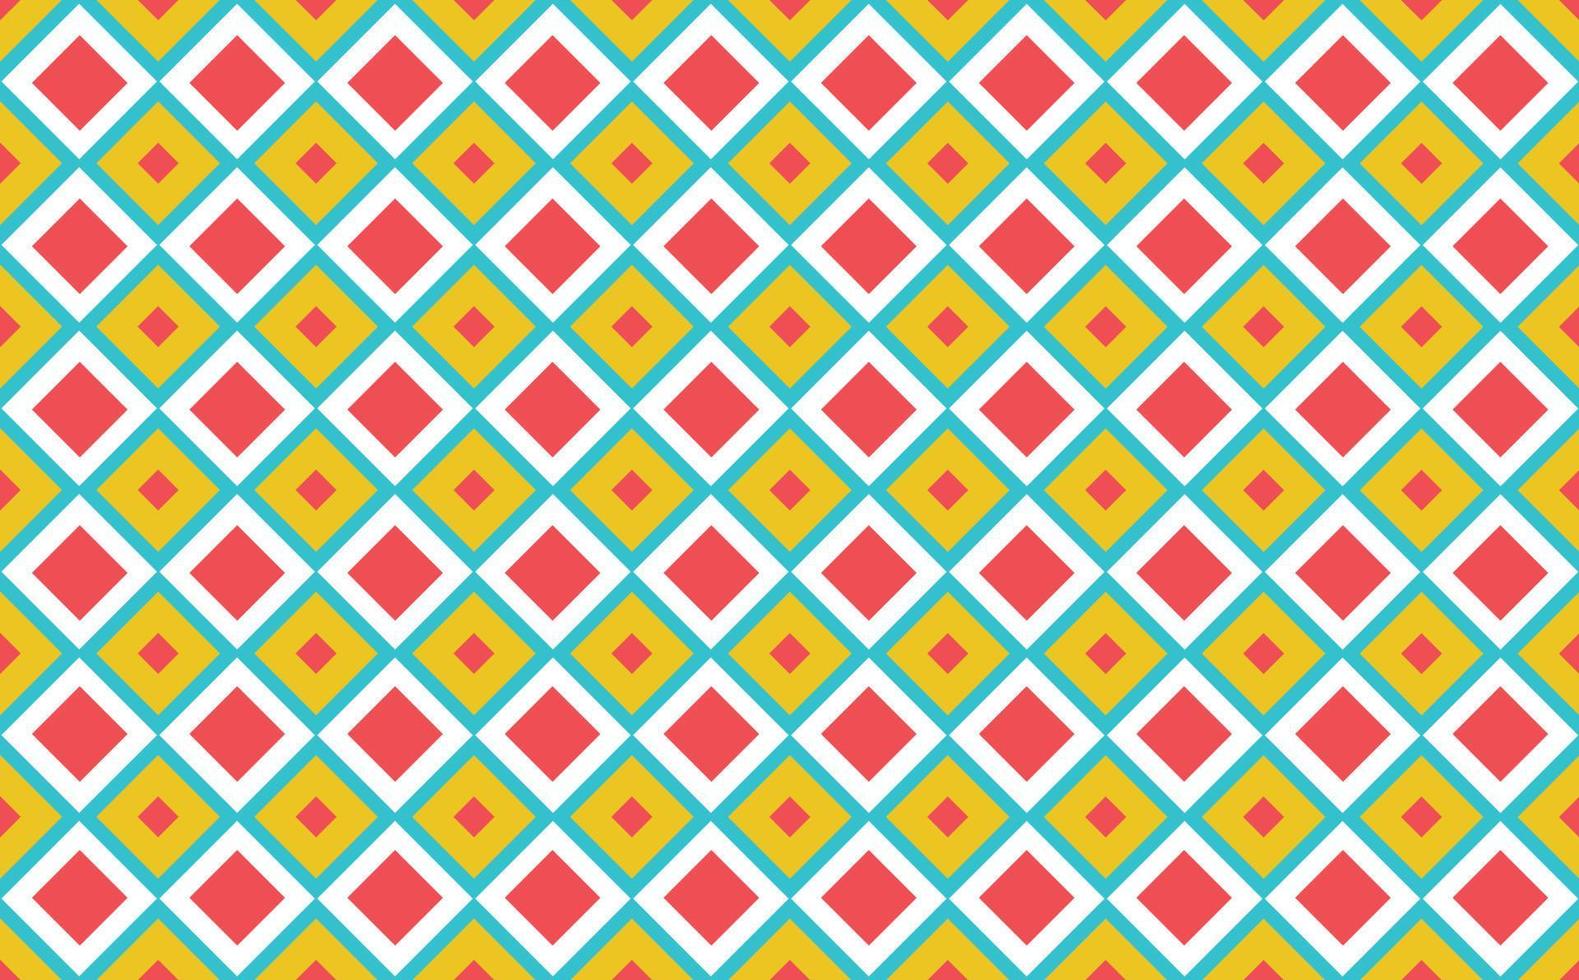 geel, groente, en rood ruit patroon. ruit watermeloen patroon. naadloos patroon voor kleding stof, vullen, banier, behang, omslag, achtergrond, kaart, en afdrukken. vector